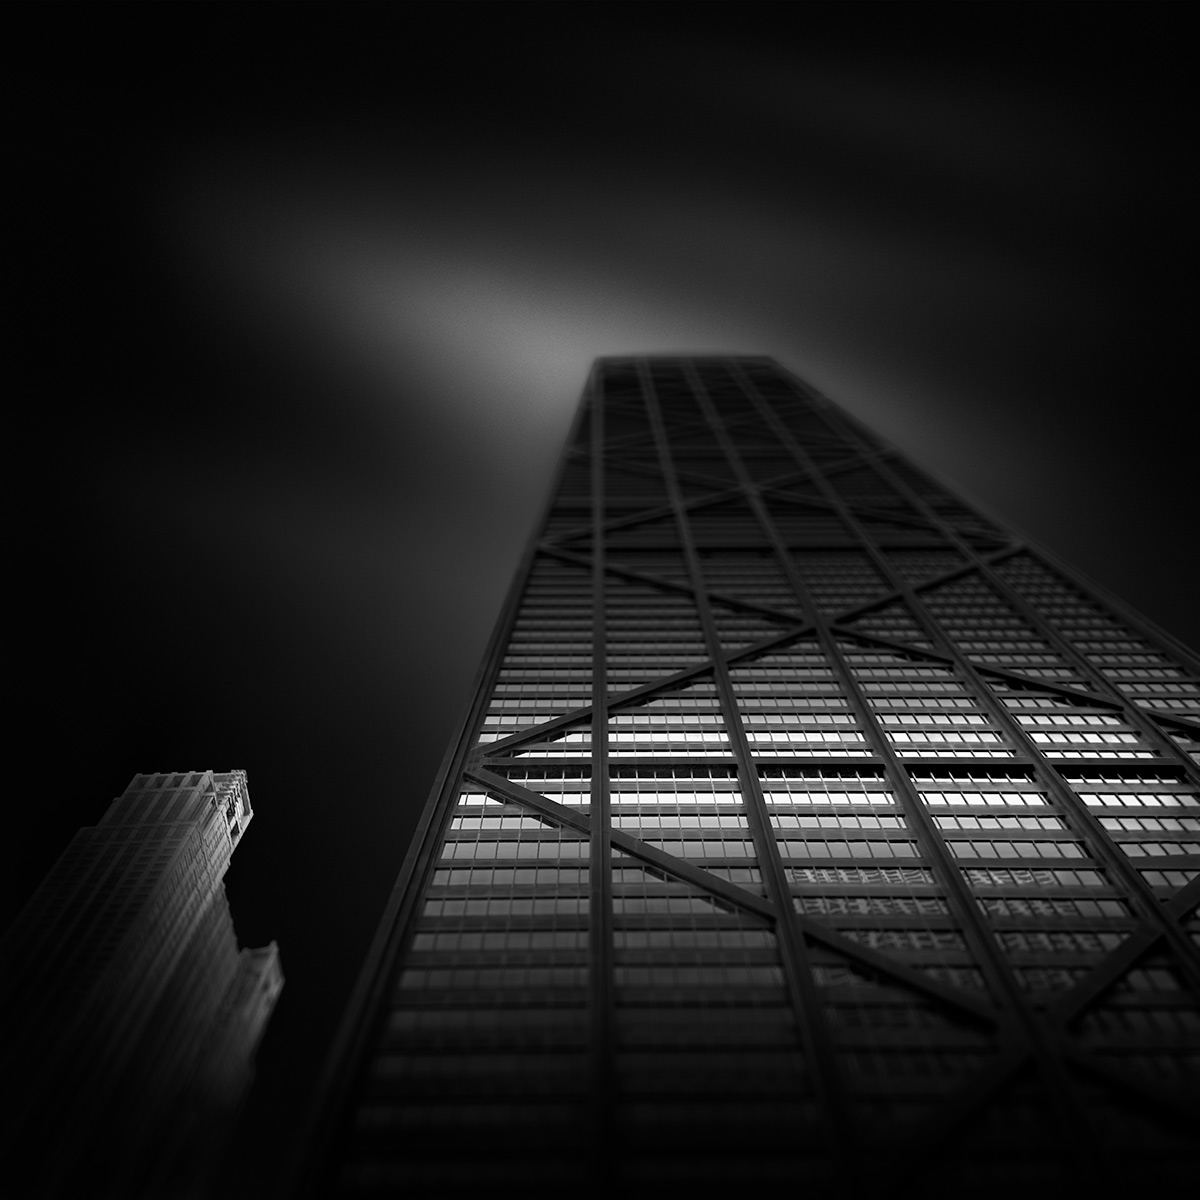 Fluid Time III - Two Worlds © Julia Anna Gospodarou hancock tower chicago